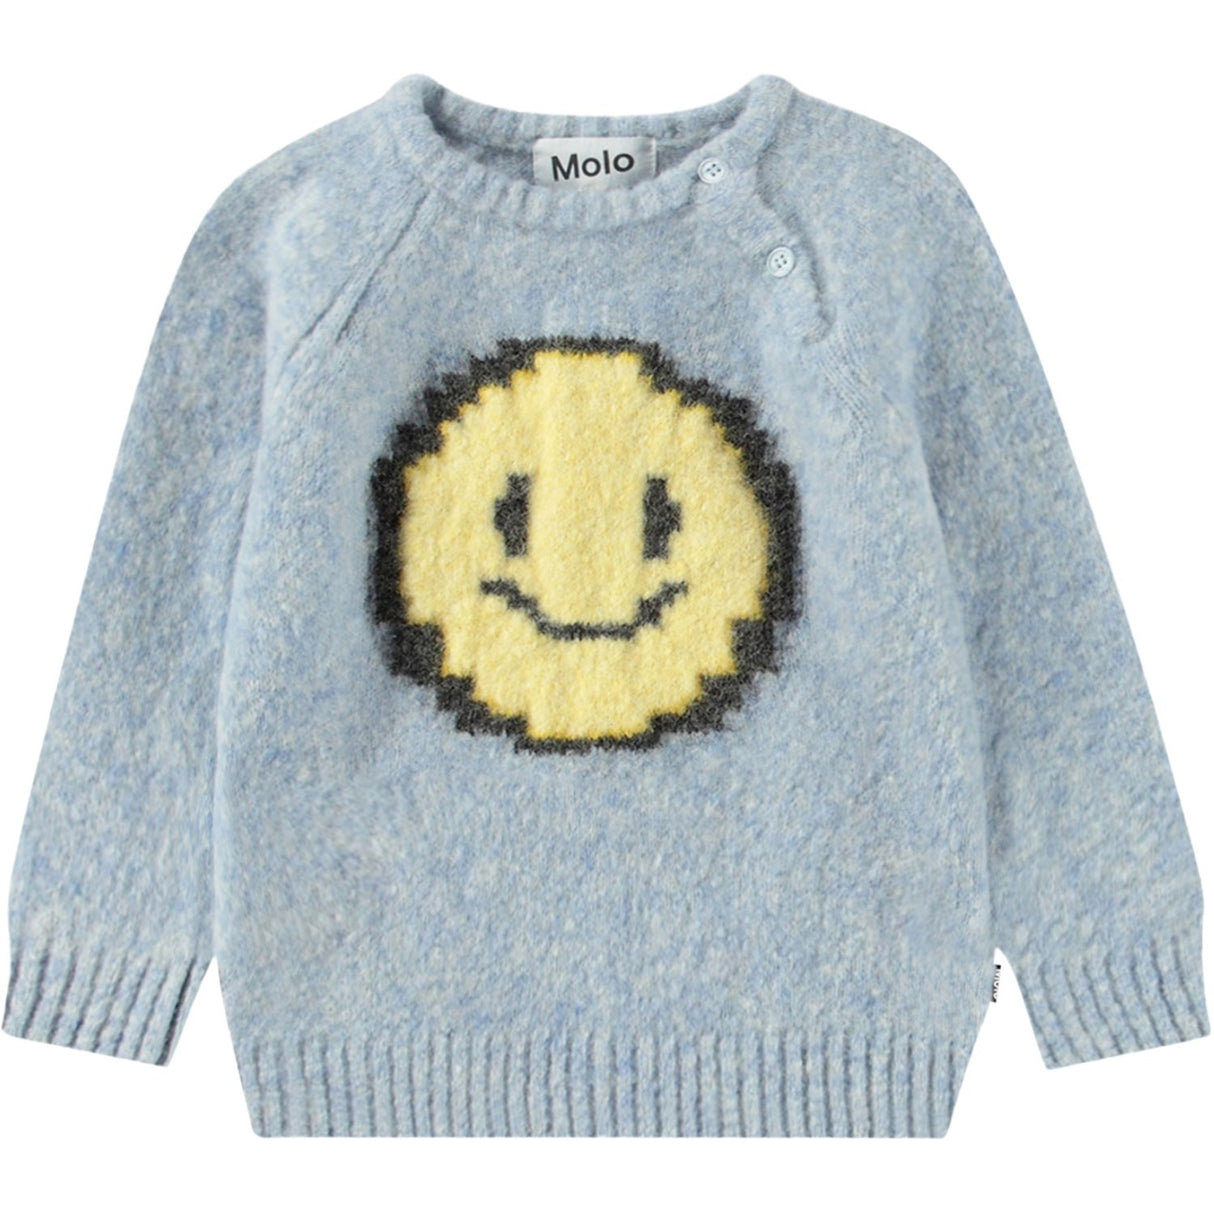 Molo Pixel Smile Bless Sweatshirt